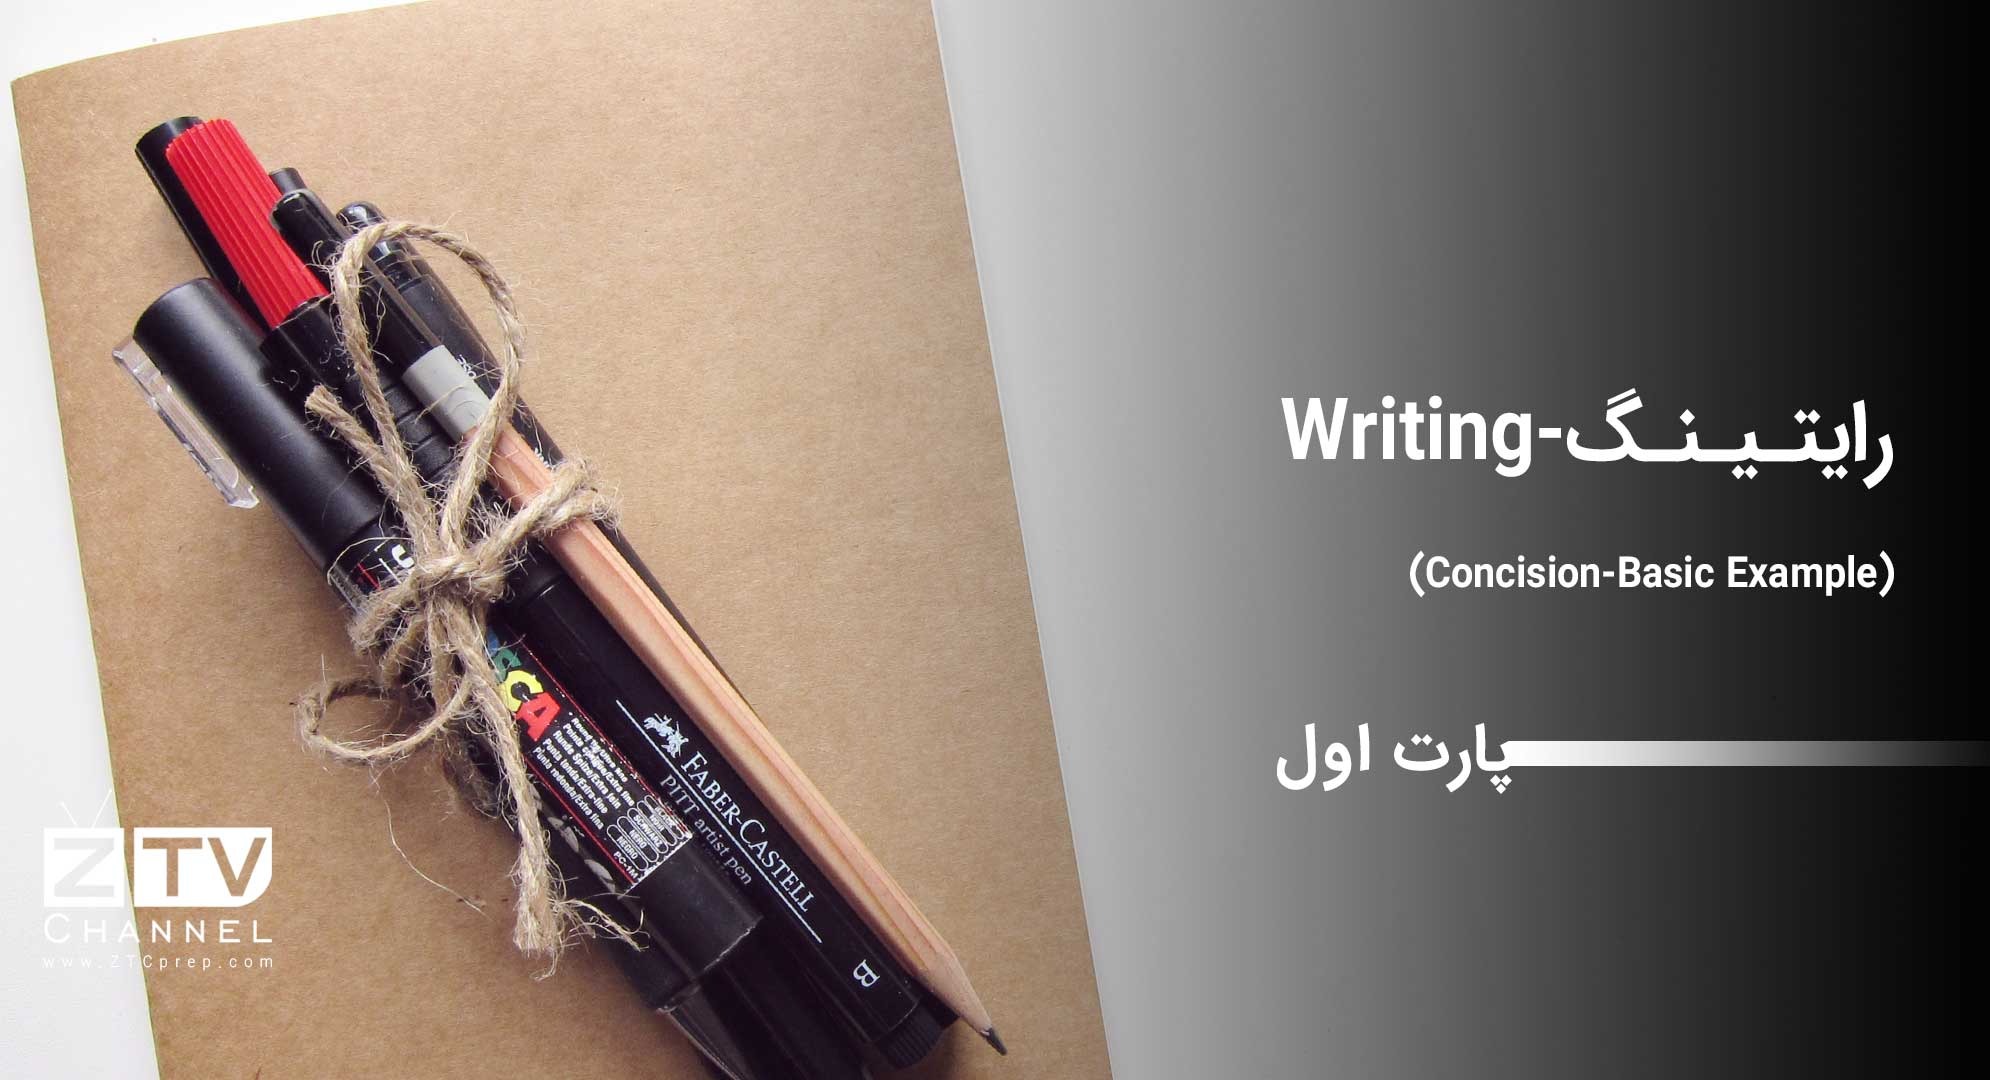 رایتینگ - (Writing (Concision-Basic Example) – پارت اول